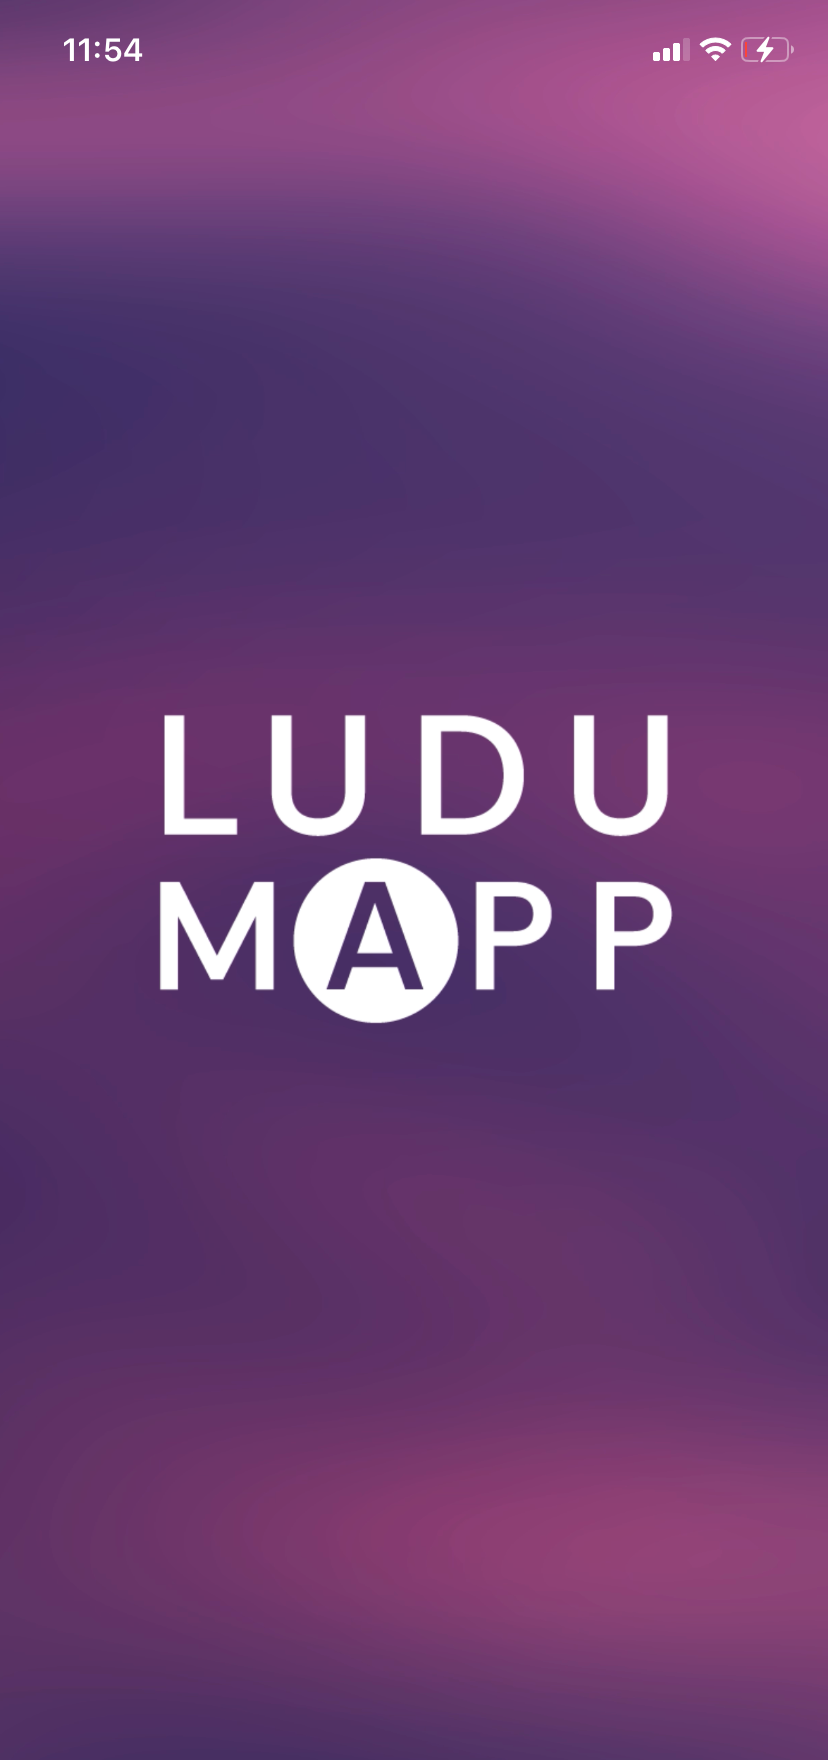 LUDU MAPP app startup